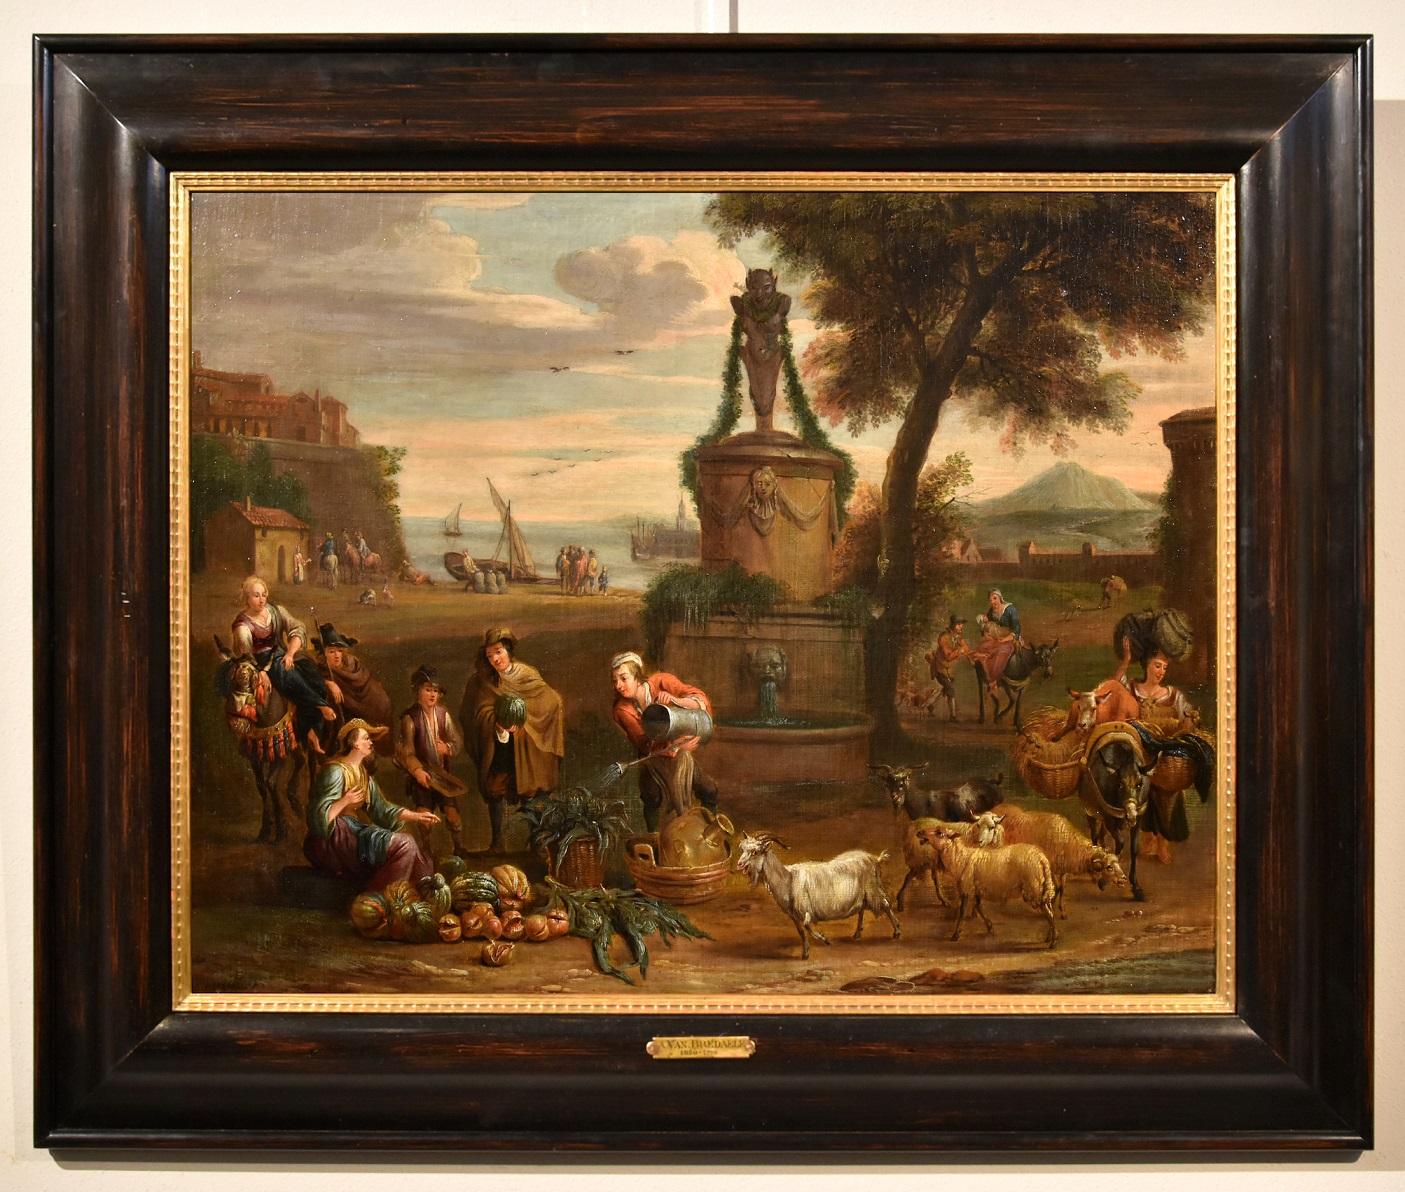 Alexander van Bredael (Antwerp 1663 - 1720) Landscape Painting - Van Bredael Signed Landscape Paint Oil on canvas Old master 17th Century Flemish